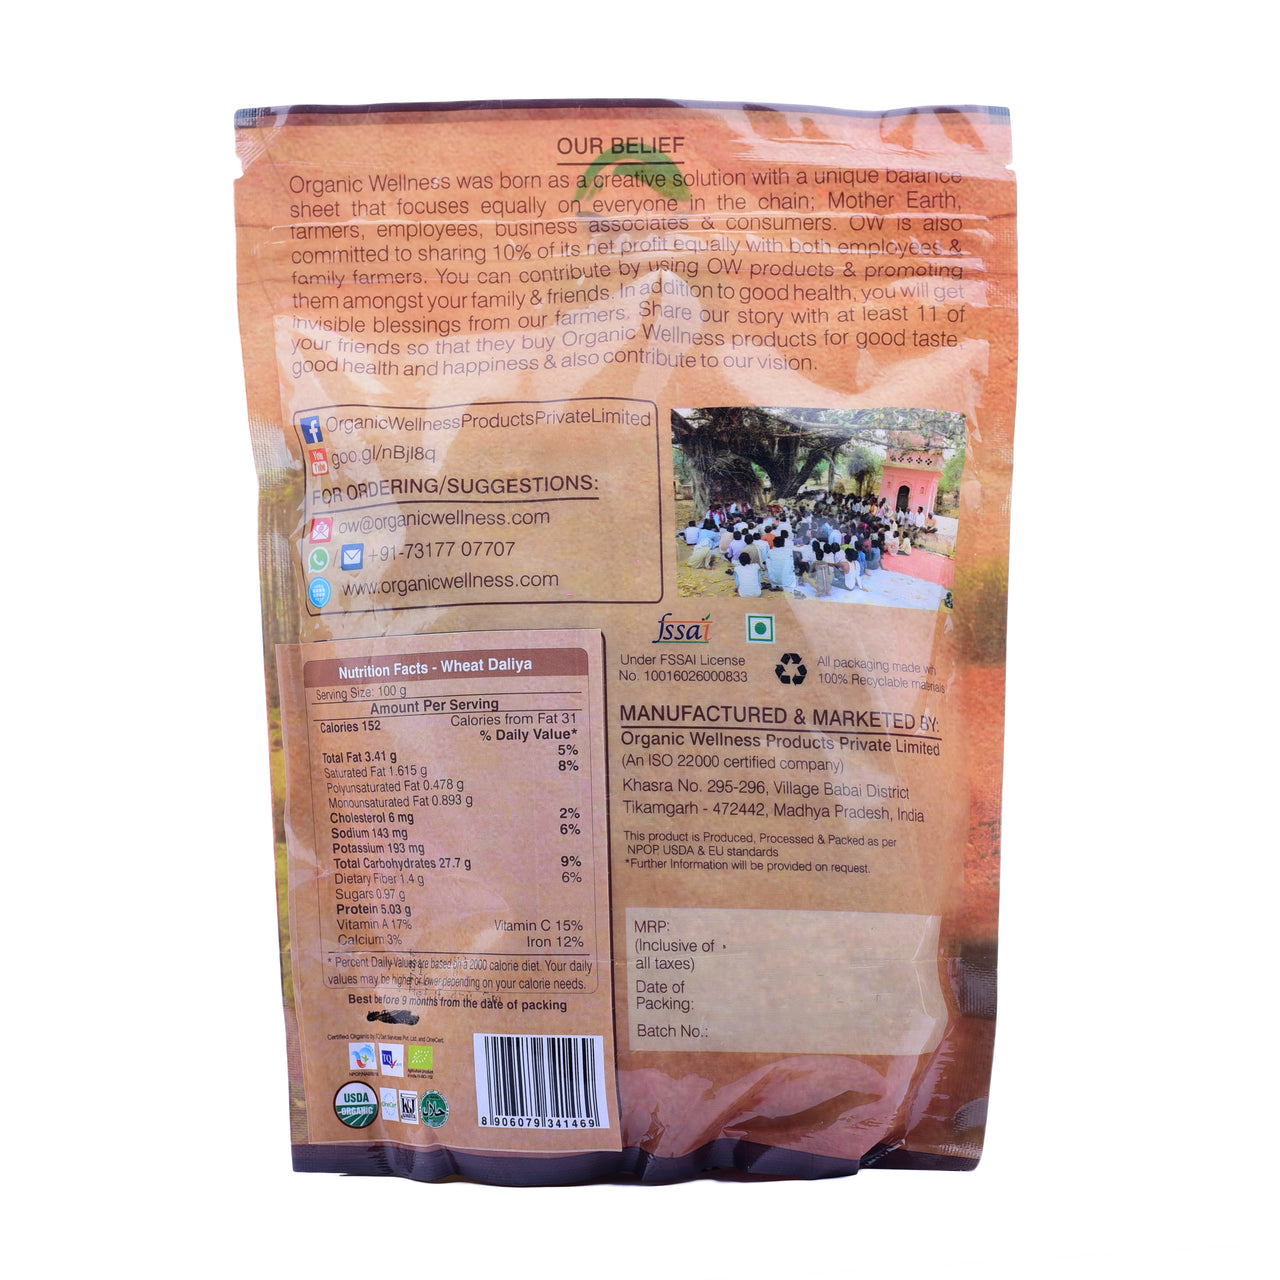 Organic Wellness Bundelkhand Wheat Dalia - Distacart